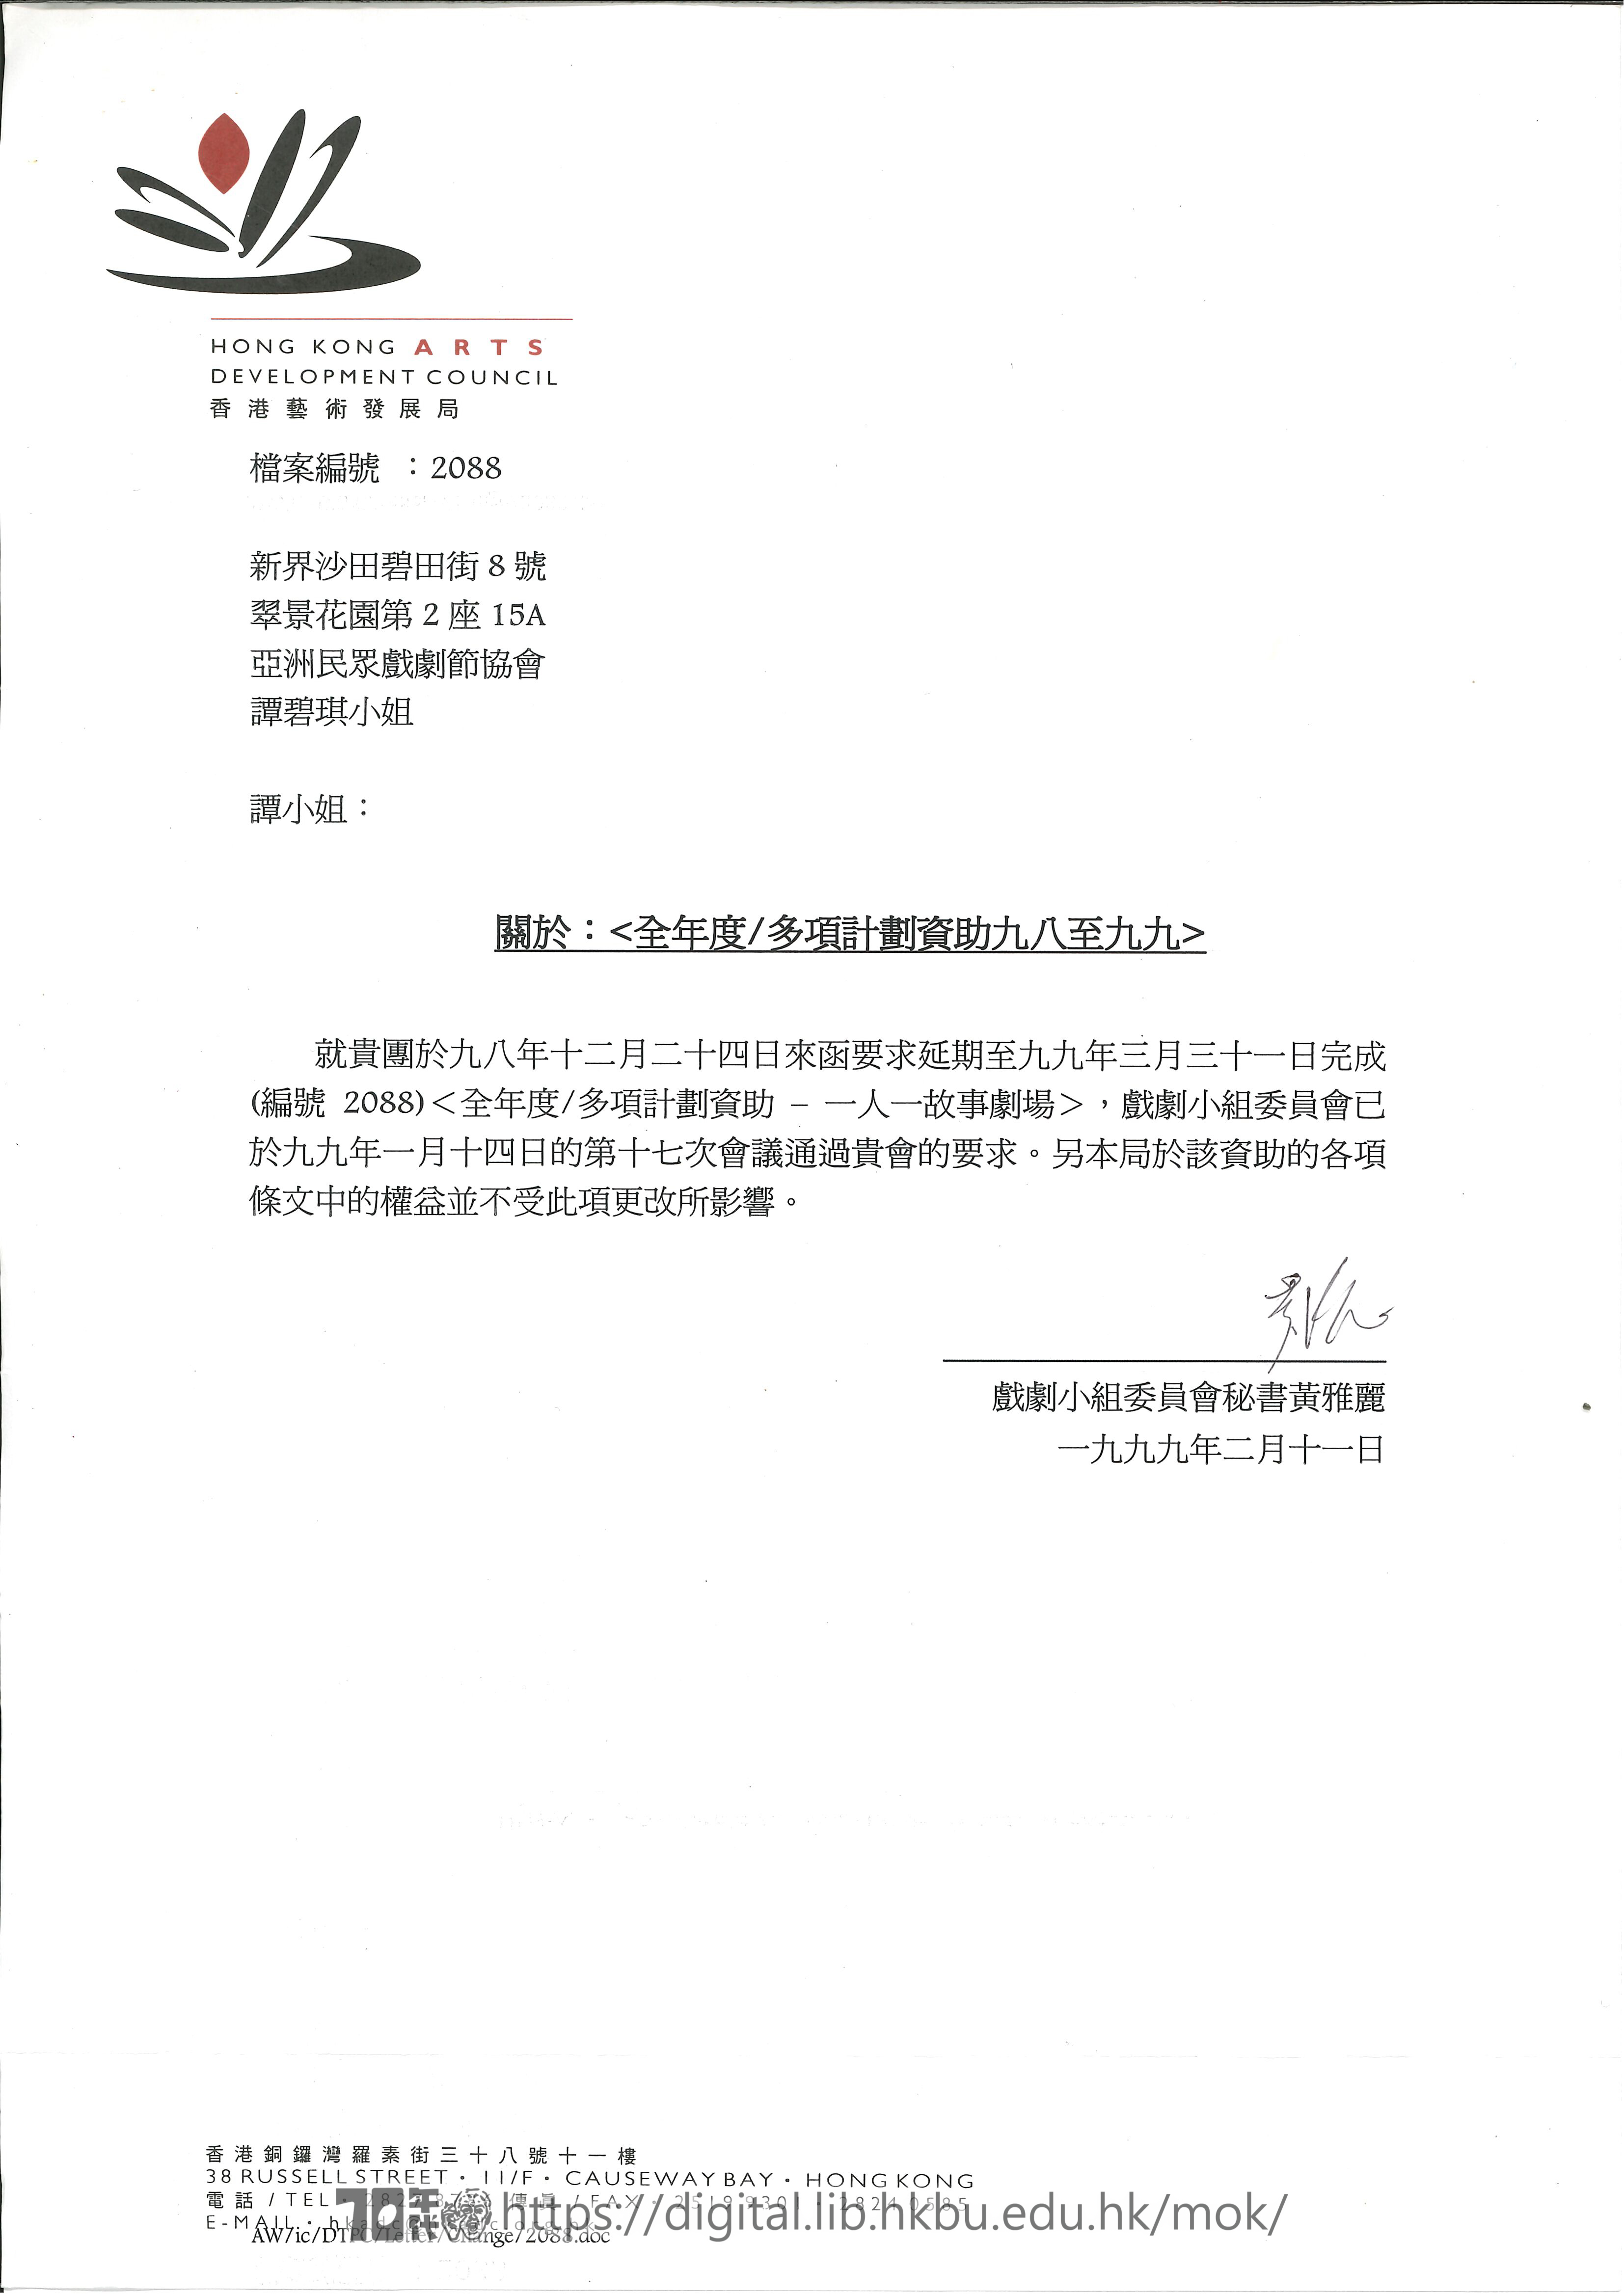 Community theatre  香港藝術發展局資助延期回復信函  